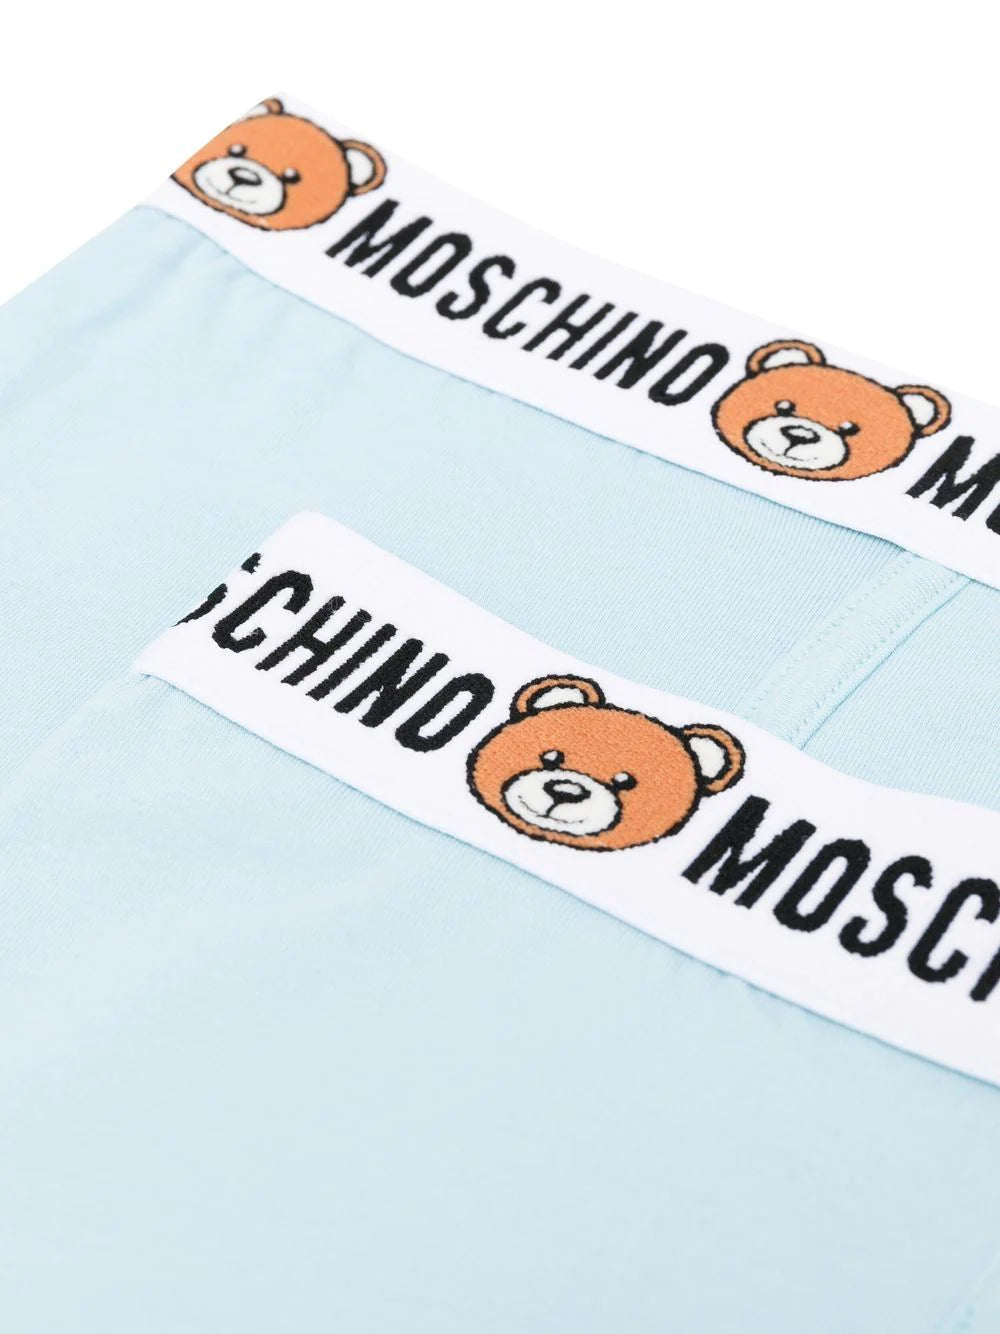 Moschino two-pack logo-tape Briefs - Farfetch